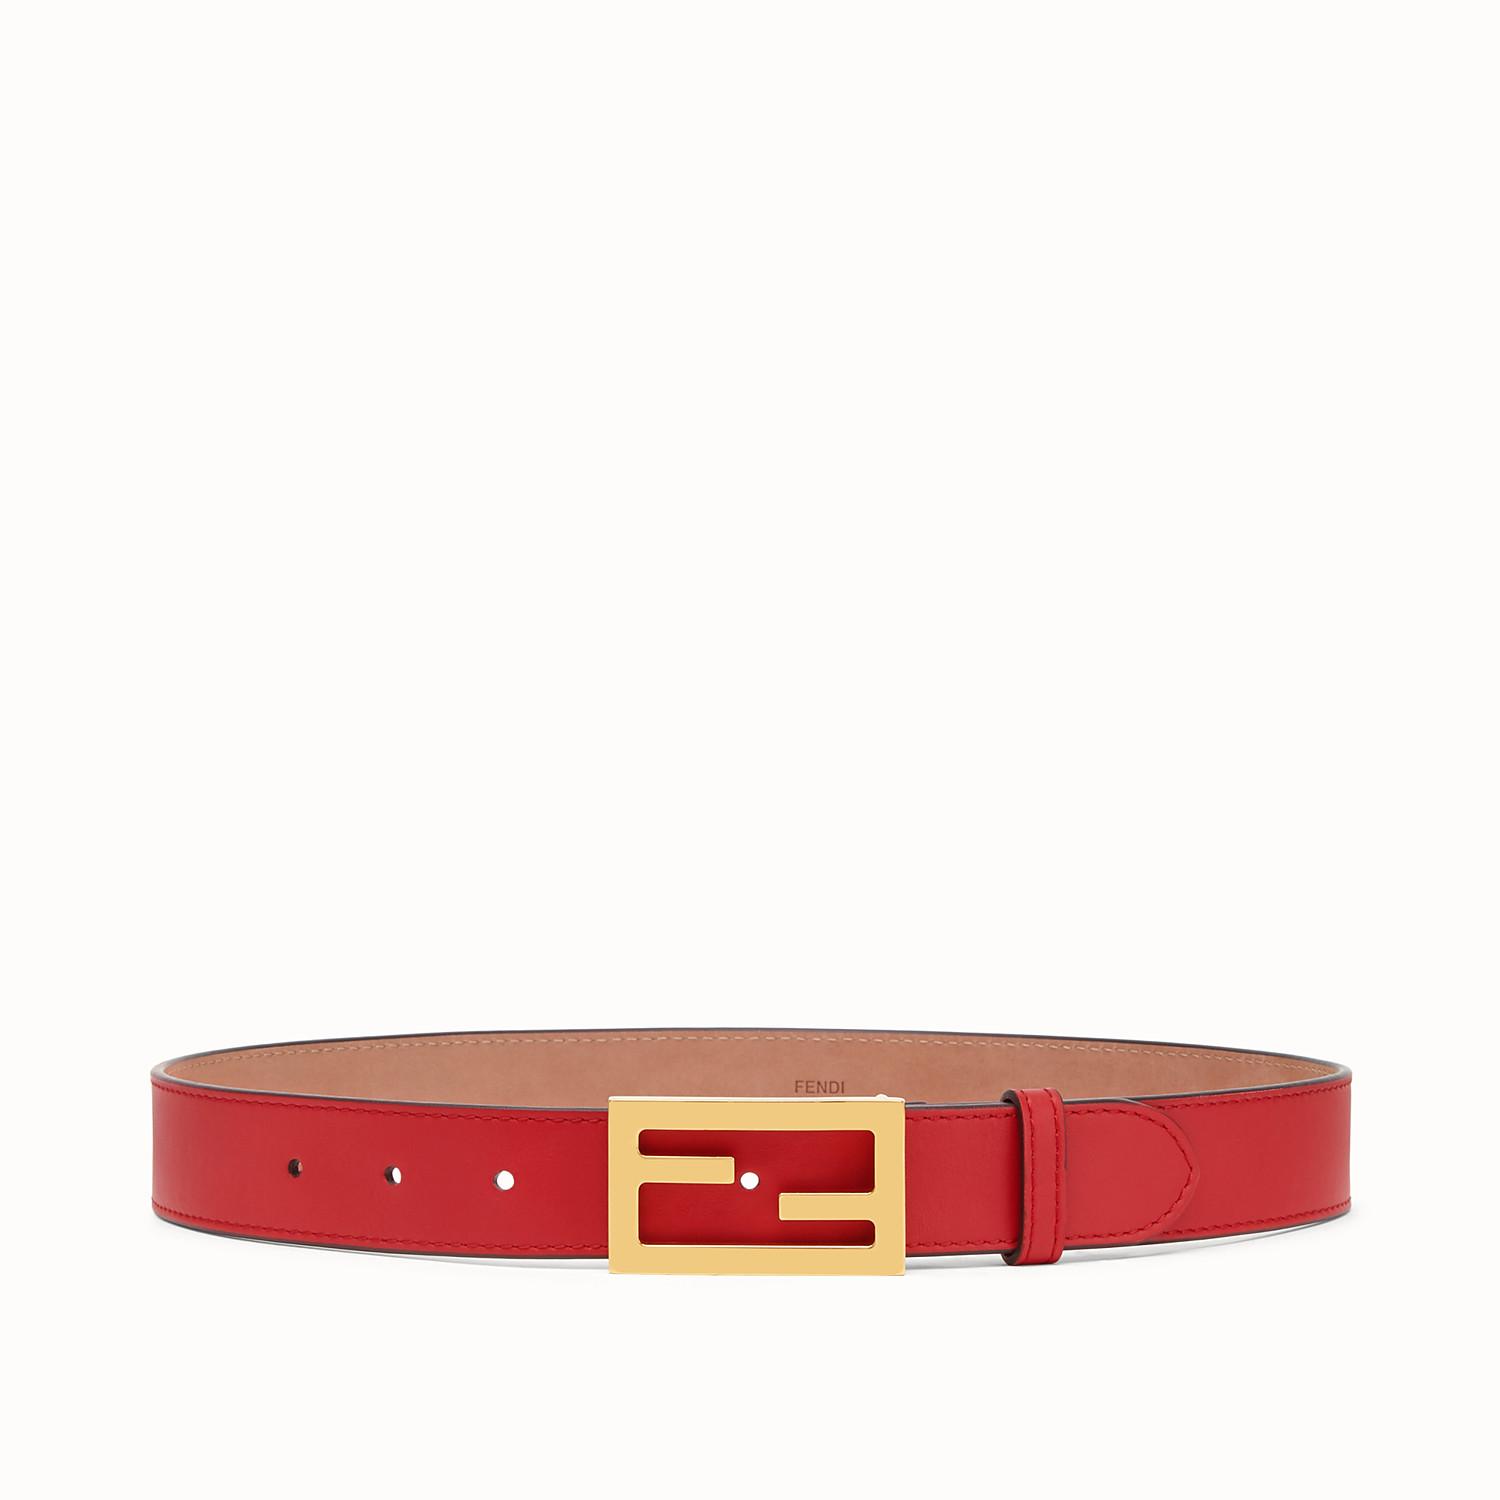 Fendi Leather Belt in Red - Lyst